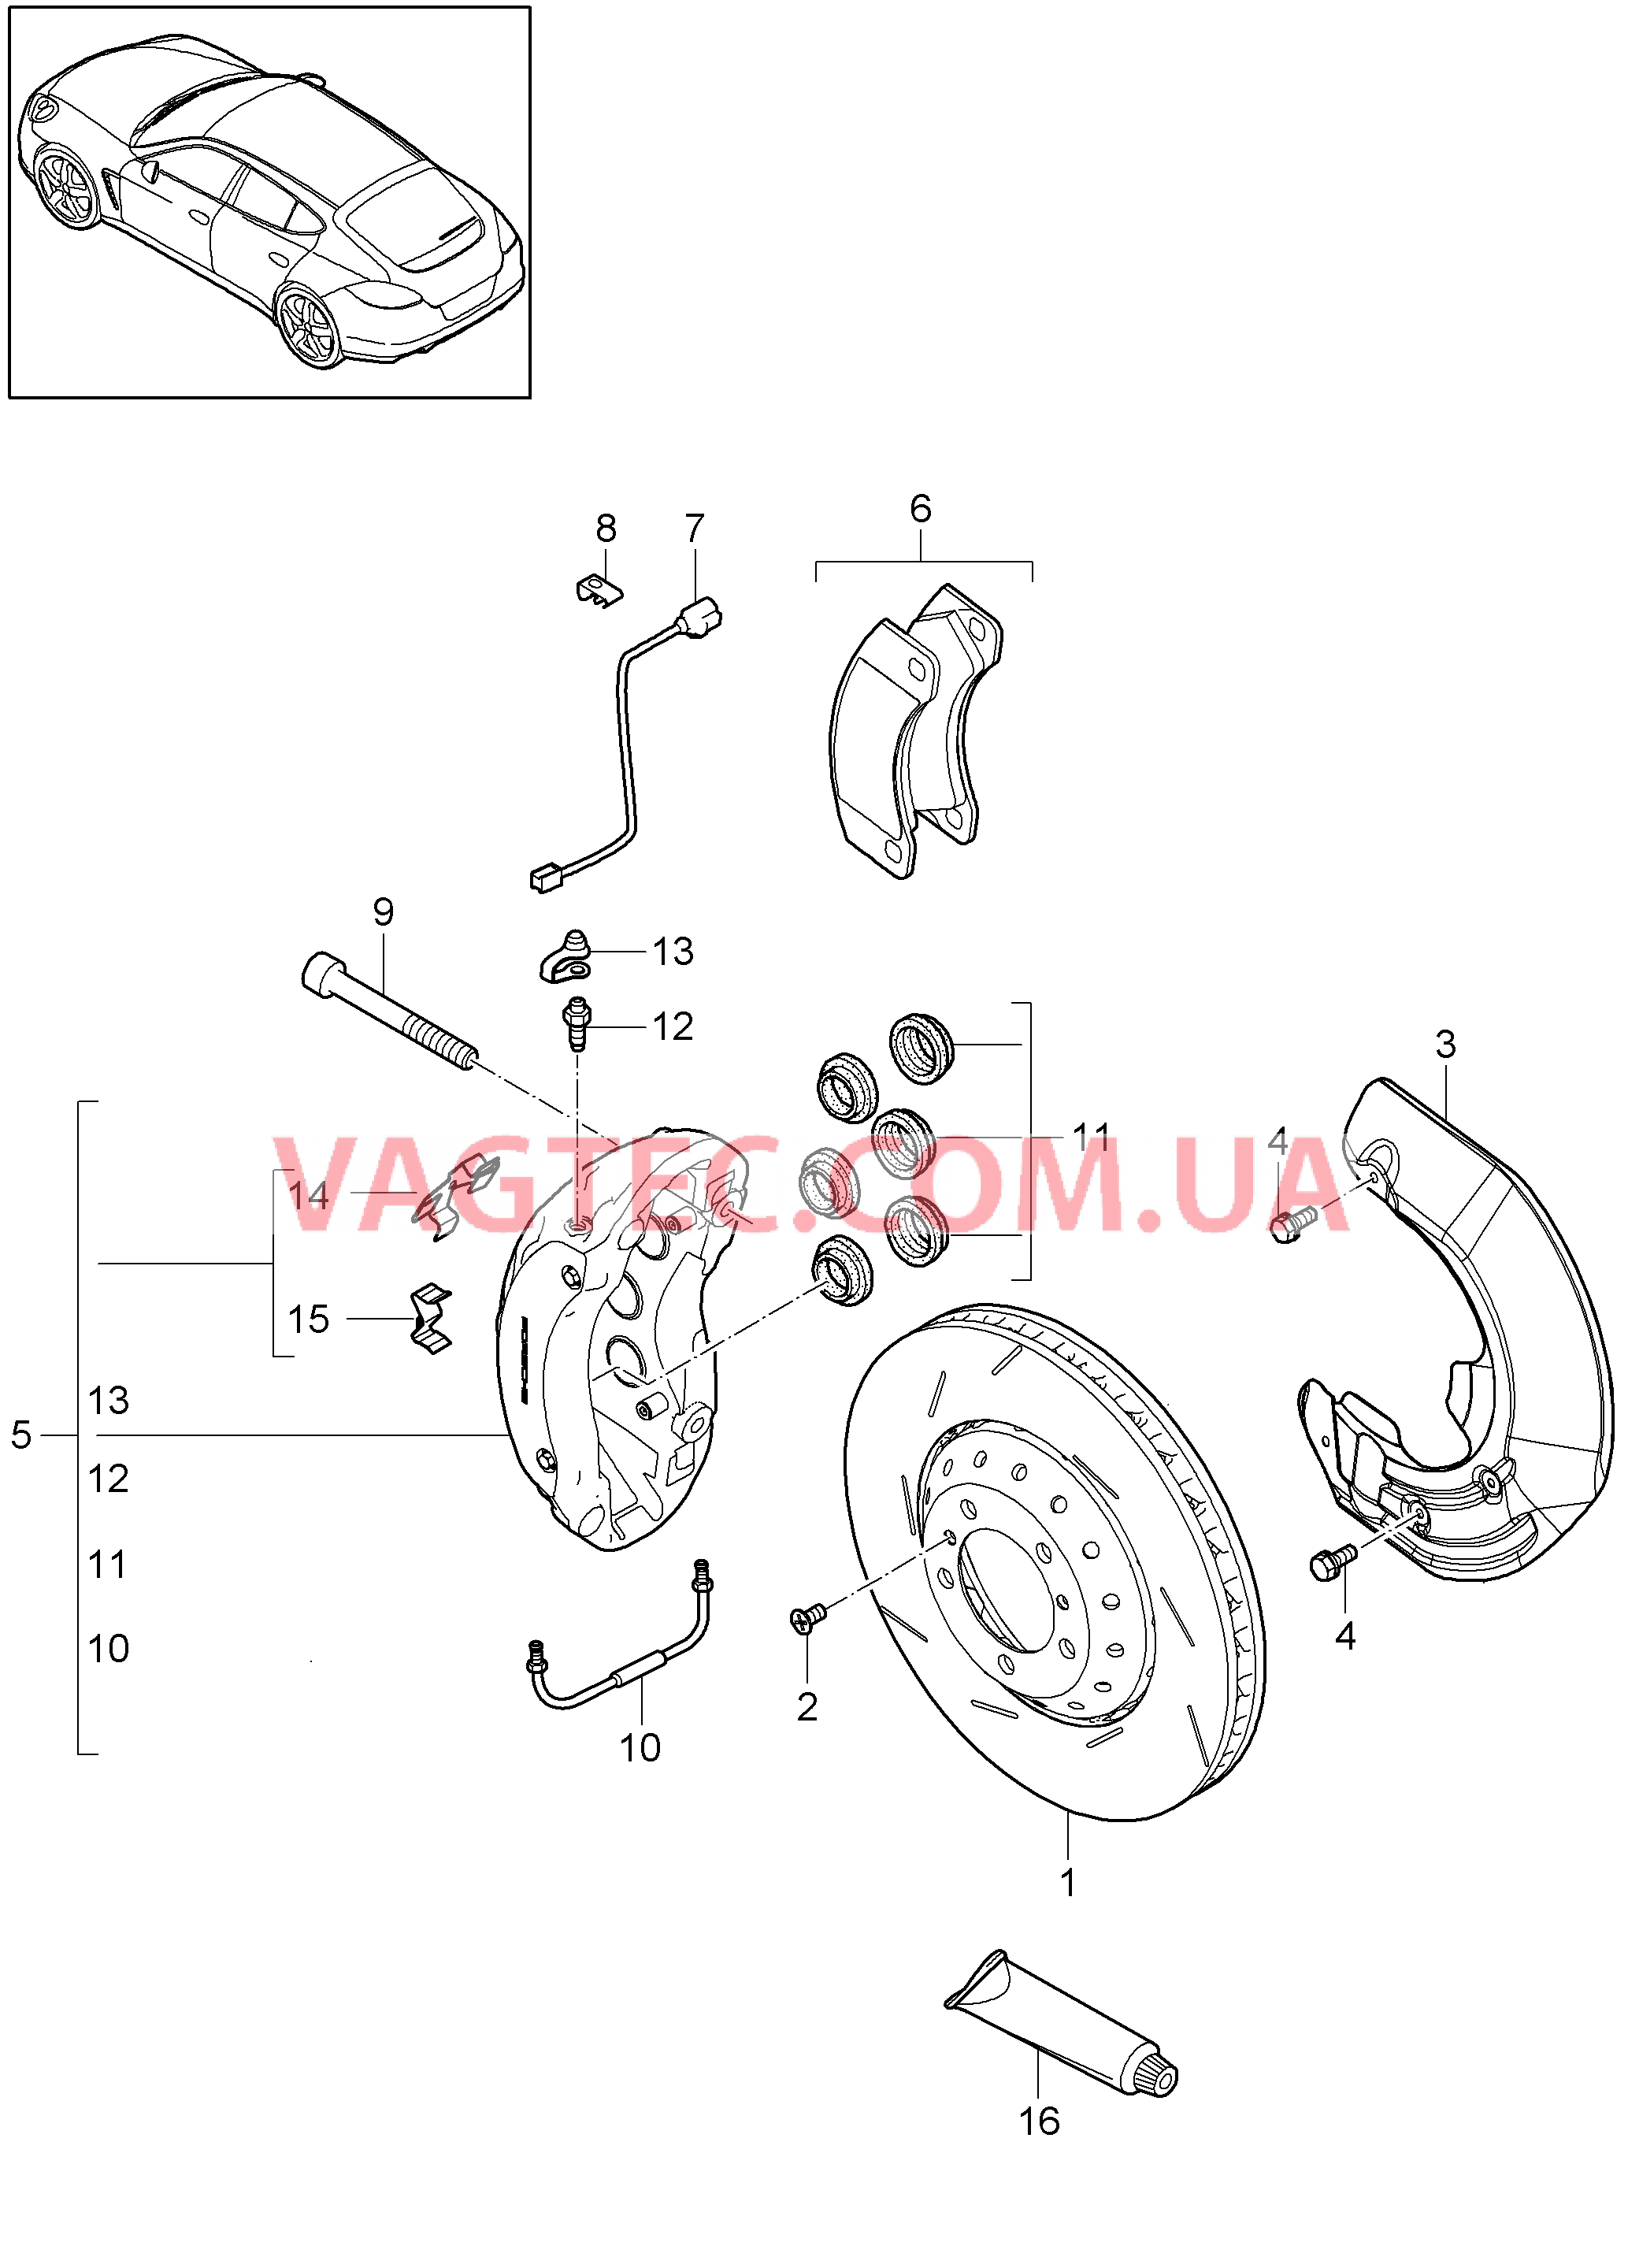 602-002 Дисковой тормоз, Передняя ось
						
						MCW.DA, MCX.PA/RA для PORSCHE Panamera 2010-2016USA